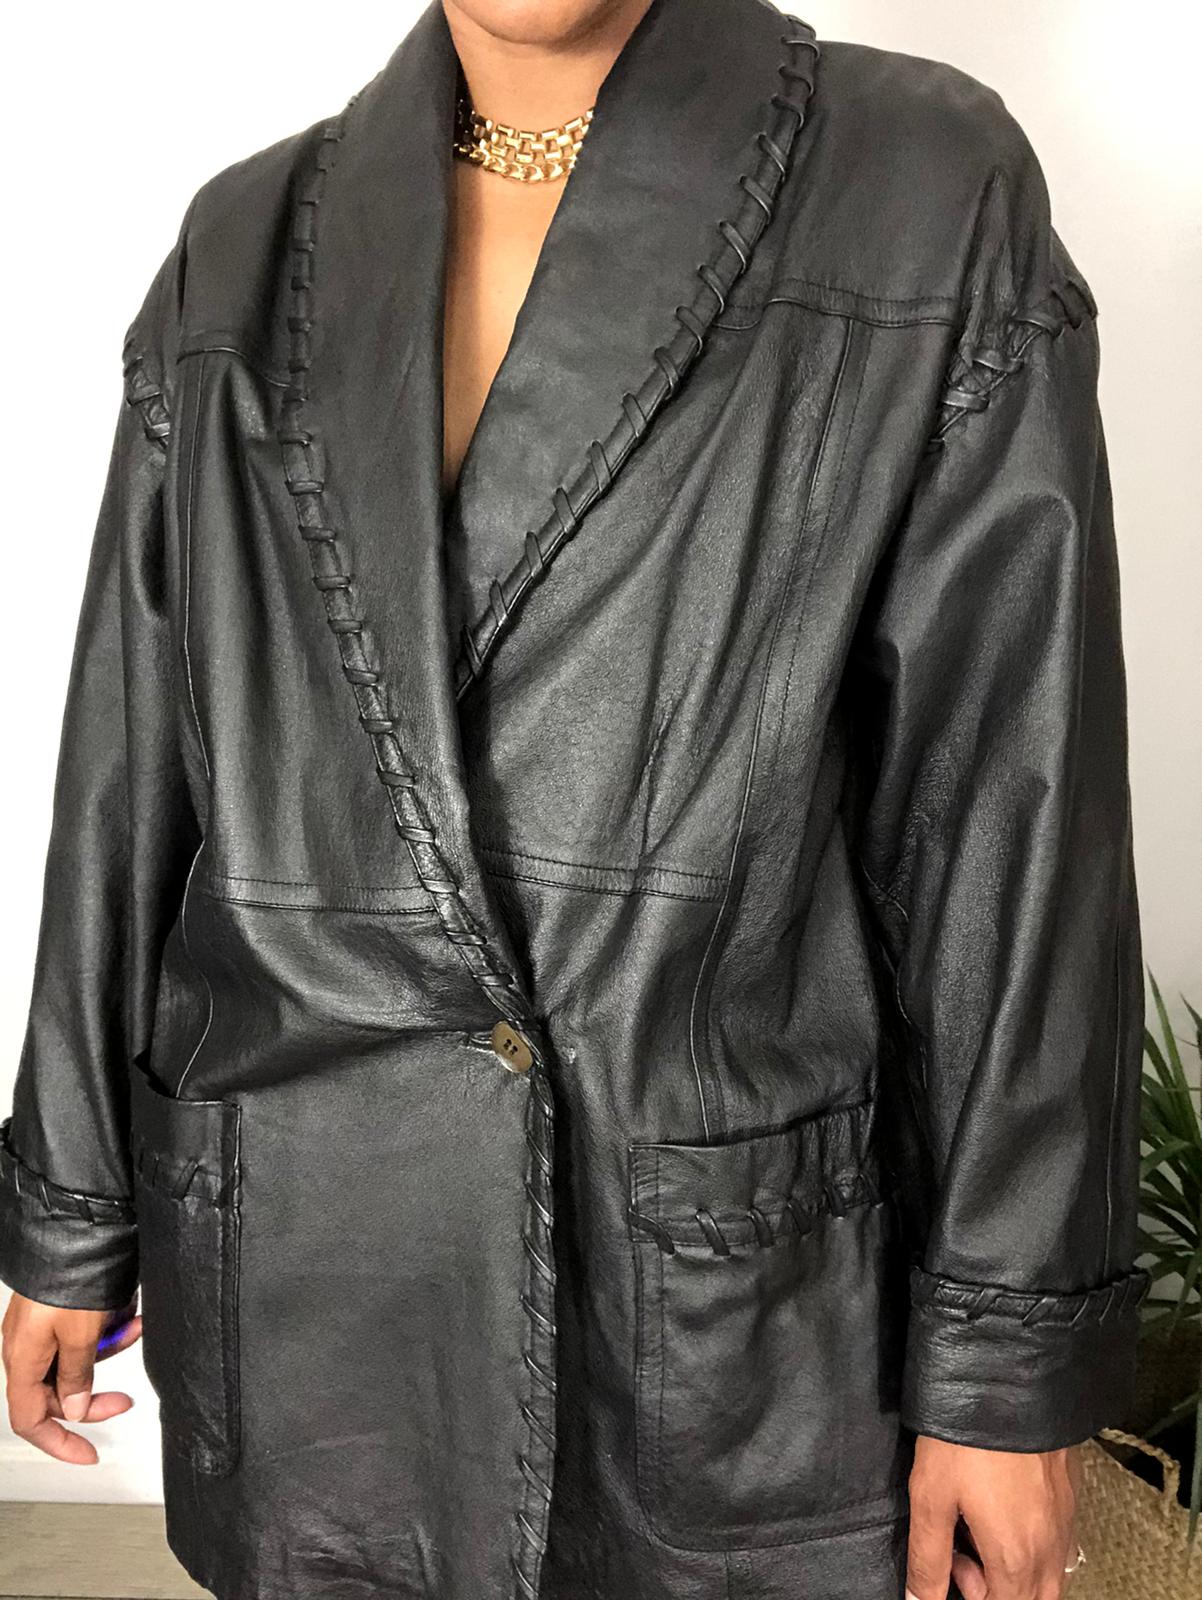 Vintage Western Leather Jacket - XL